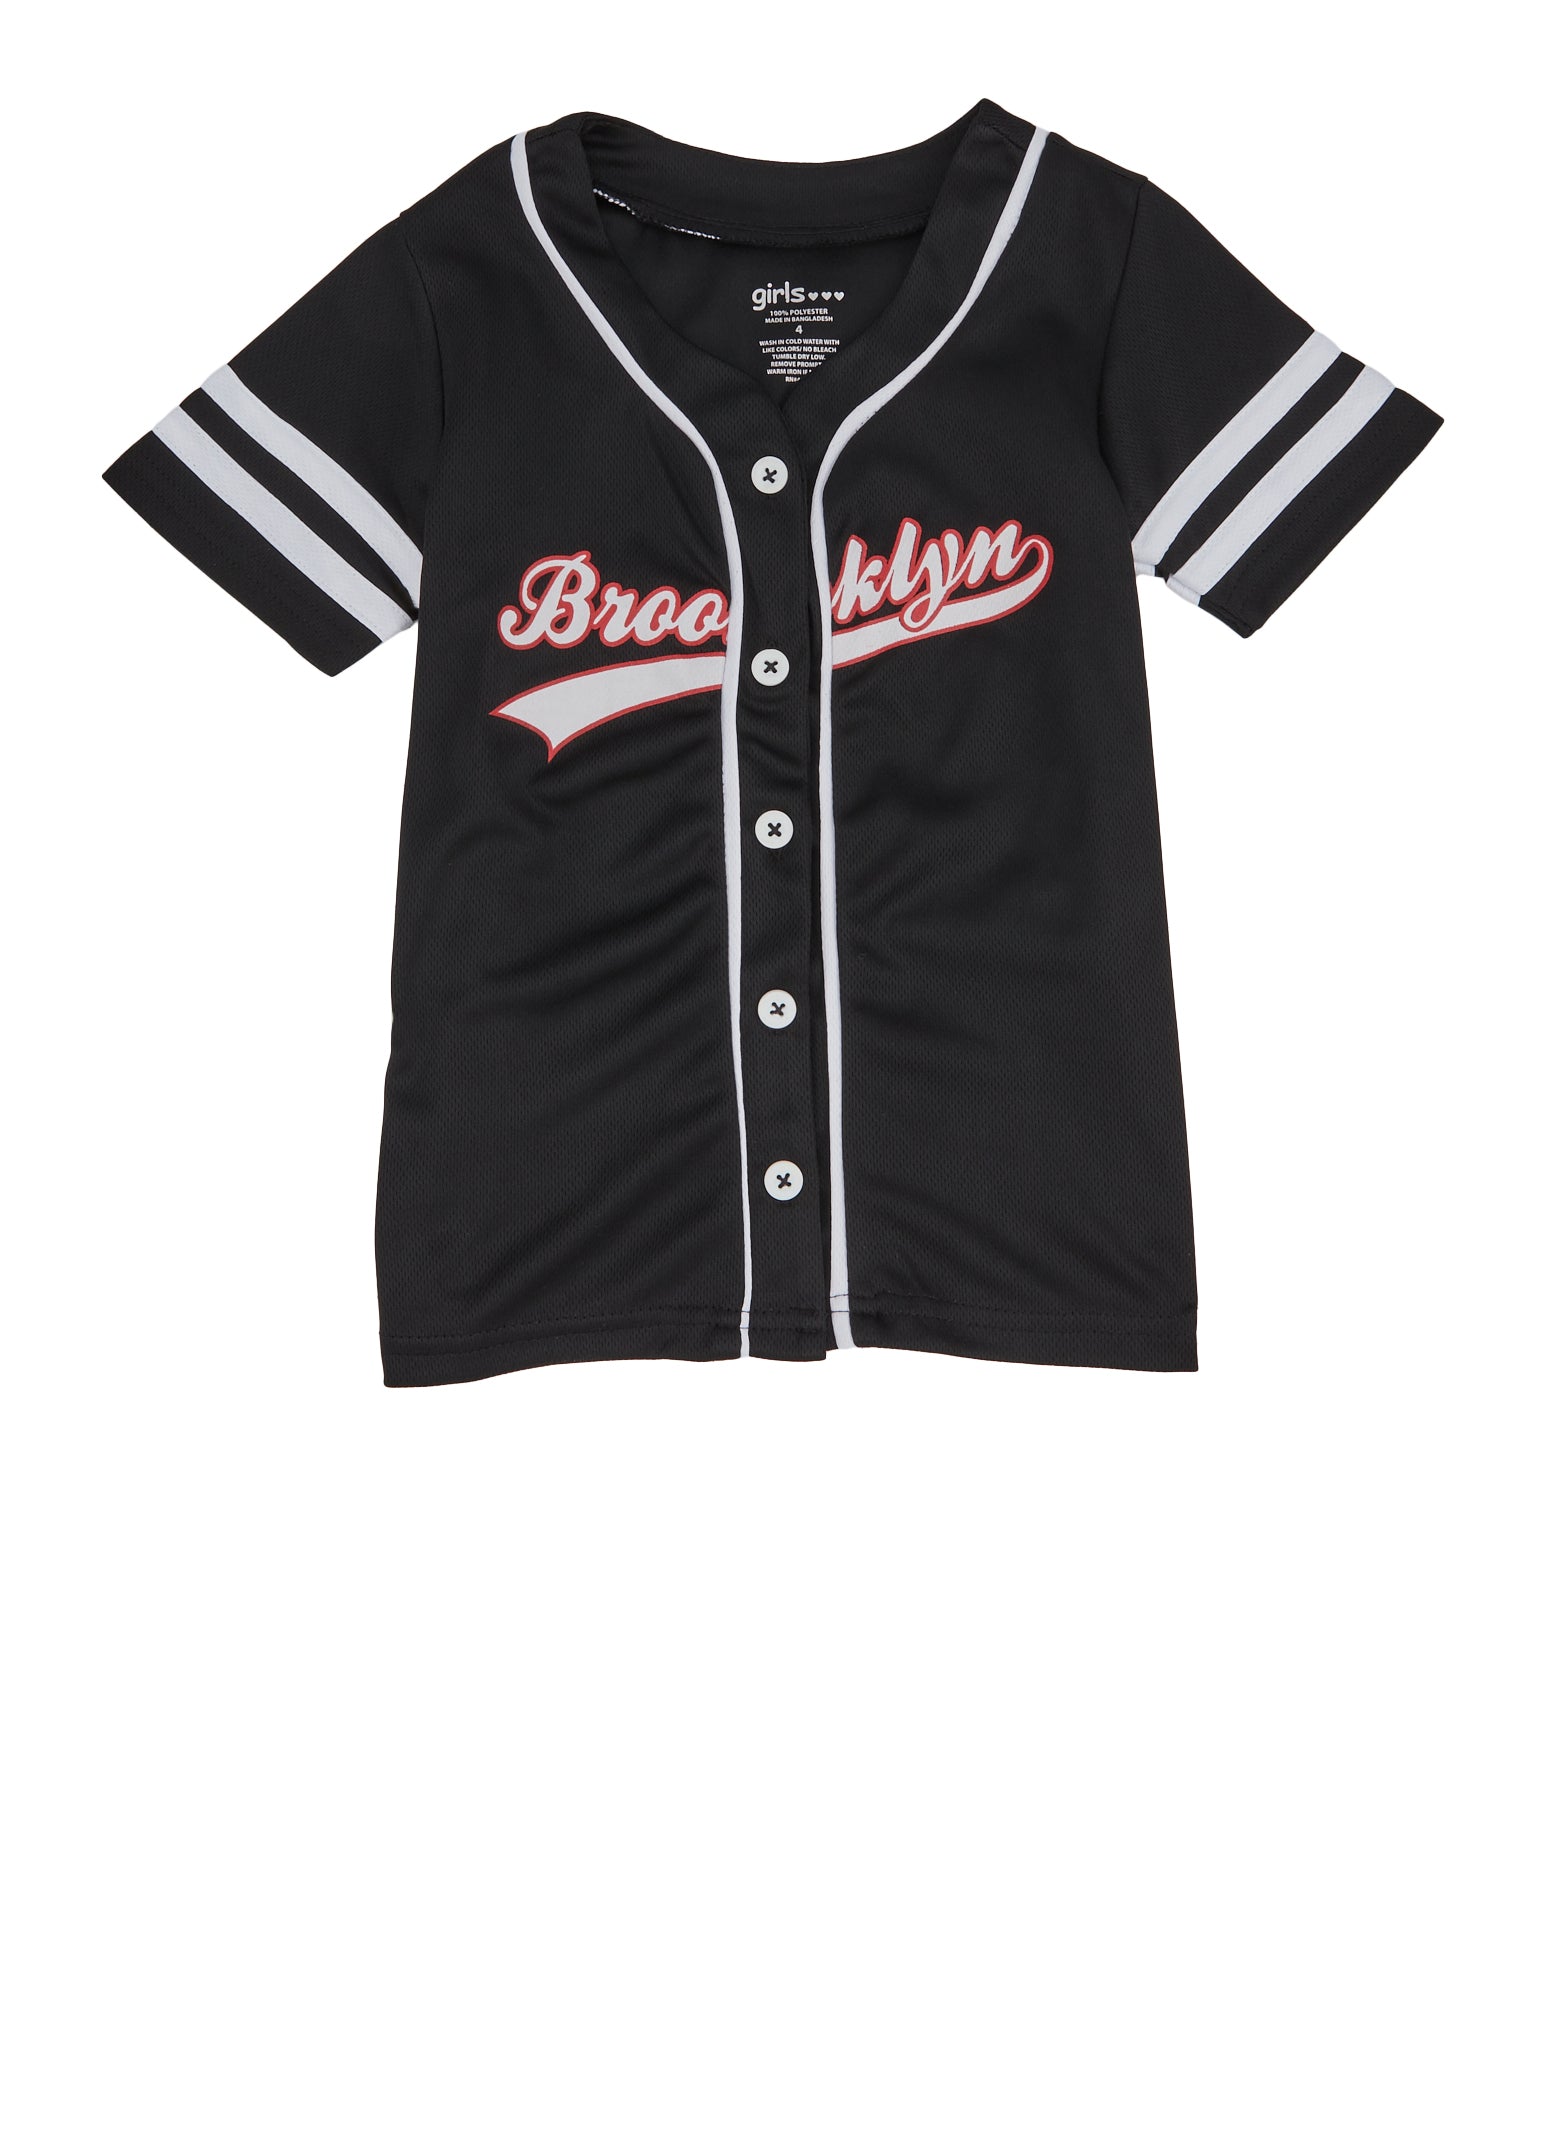 Little Girls Brooklyn Graphic Baseball Jersey, Black, Size 4